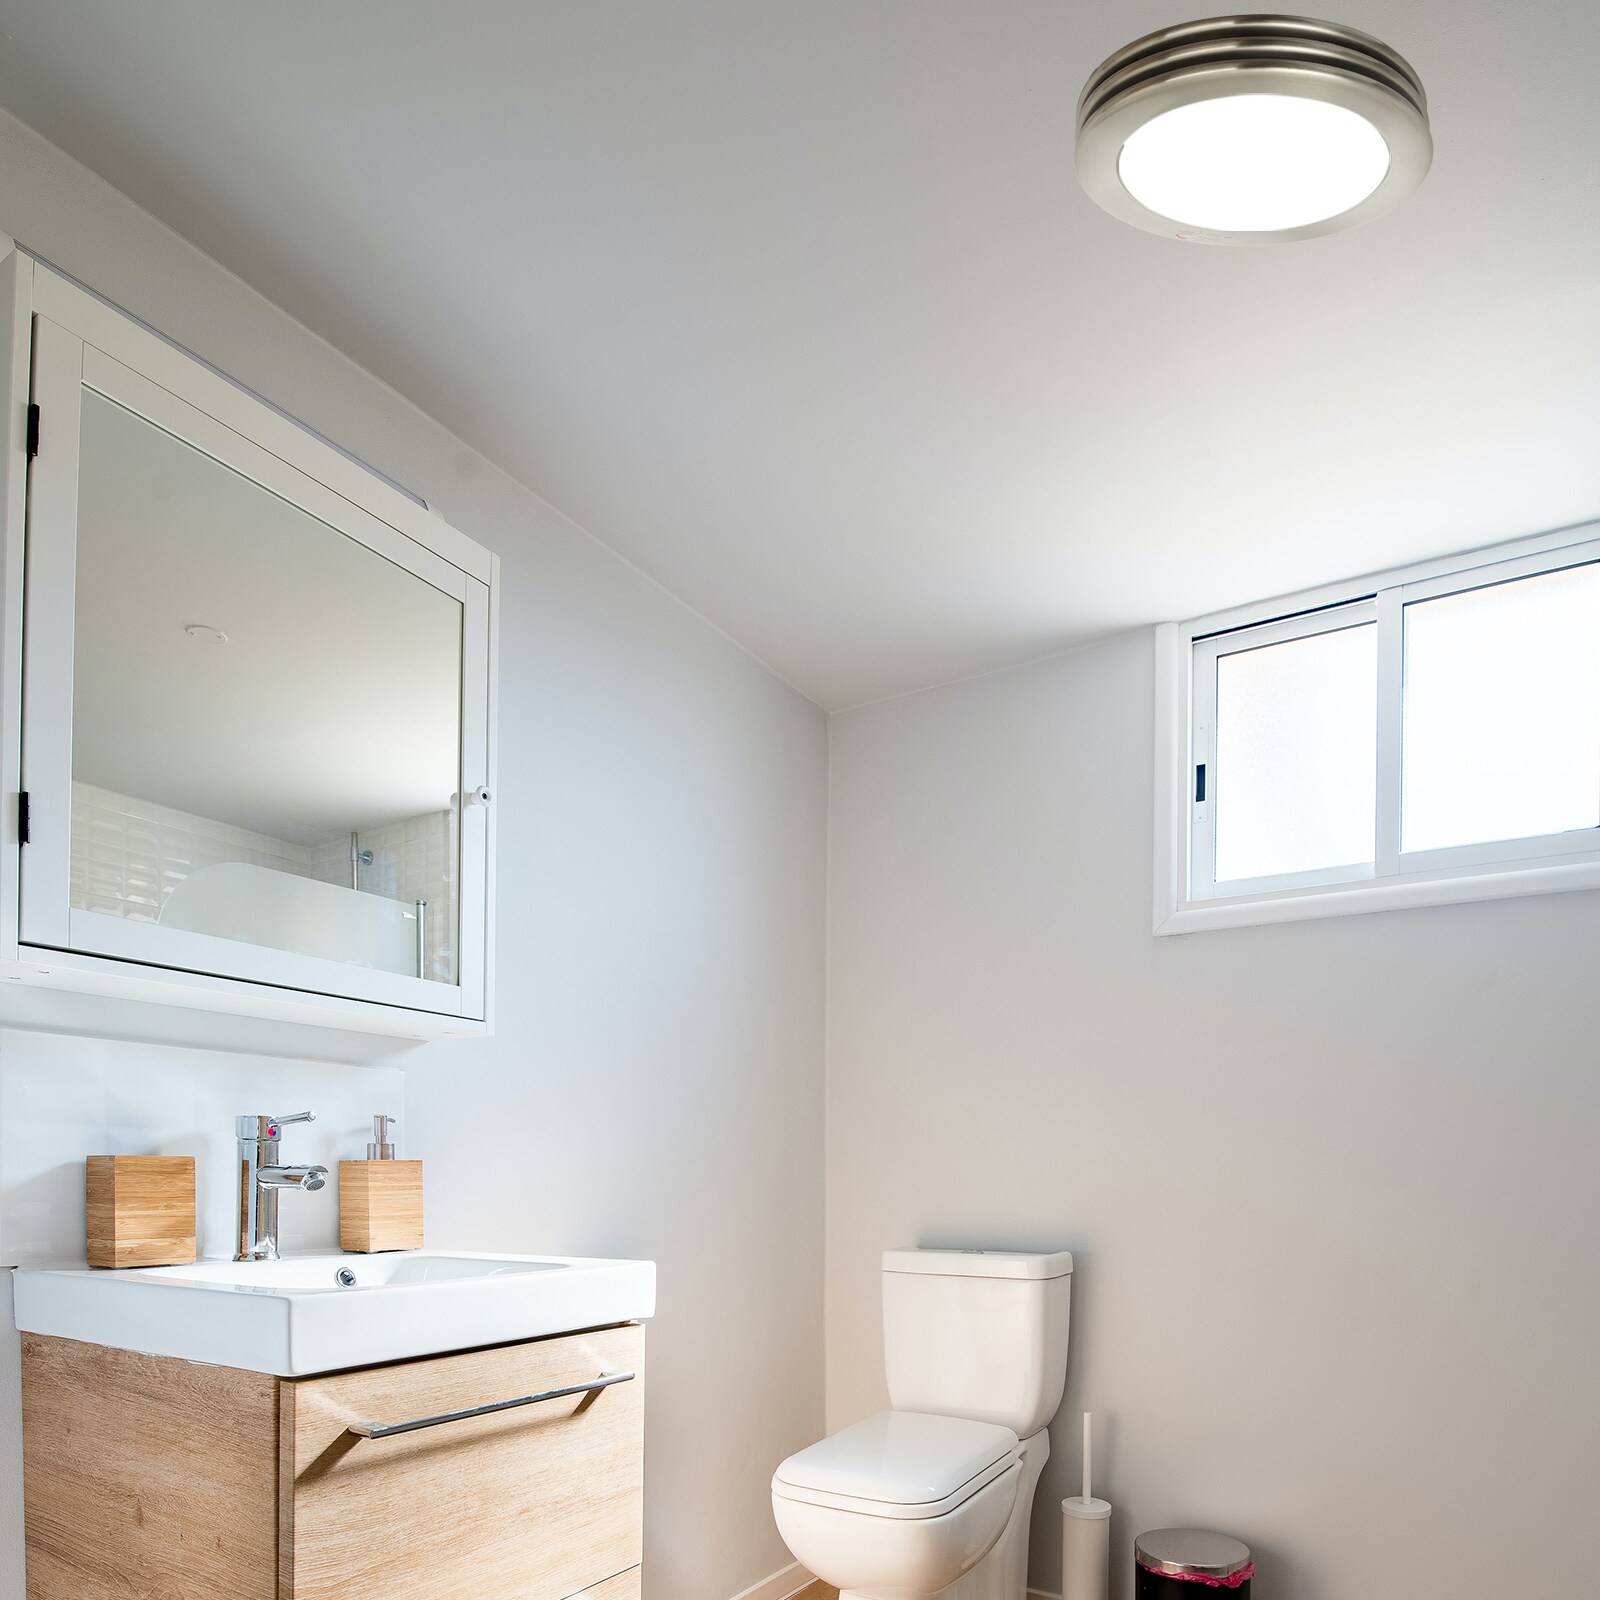 Akicon Bathroom fan with lights 2-Sone 80-CFM Brushed Nickel Decorative ...